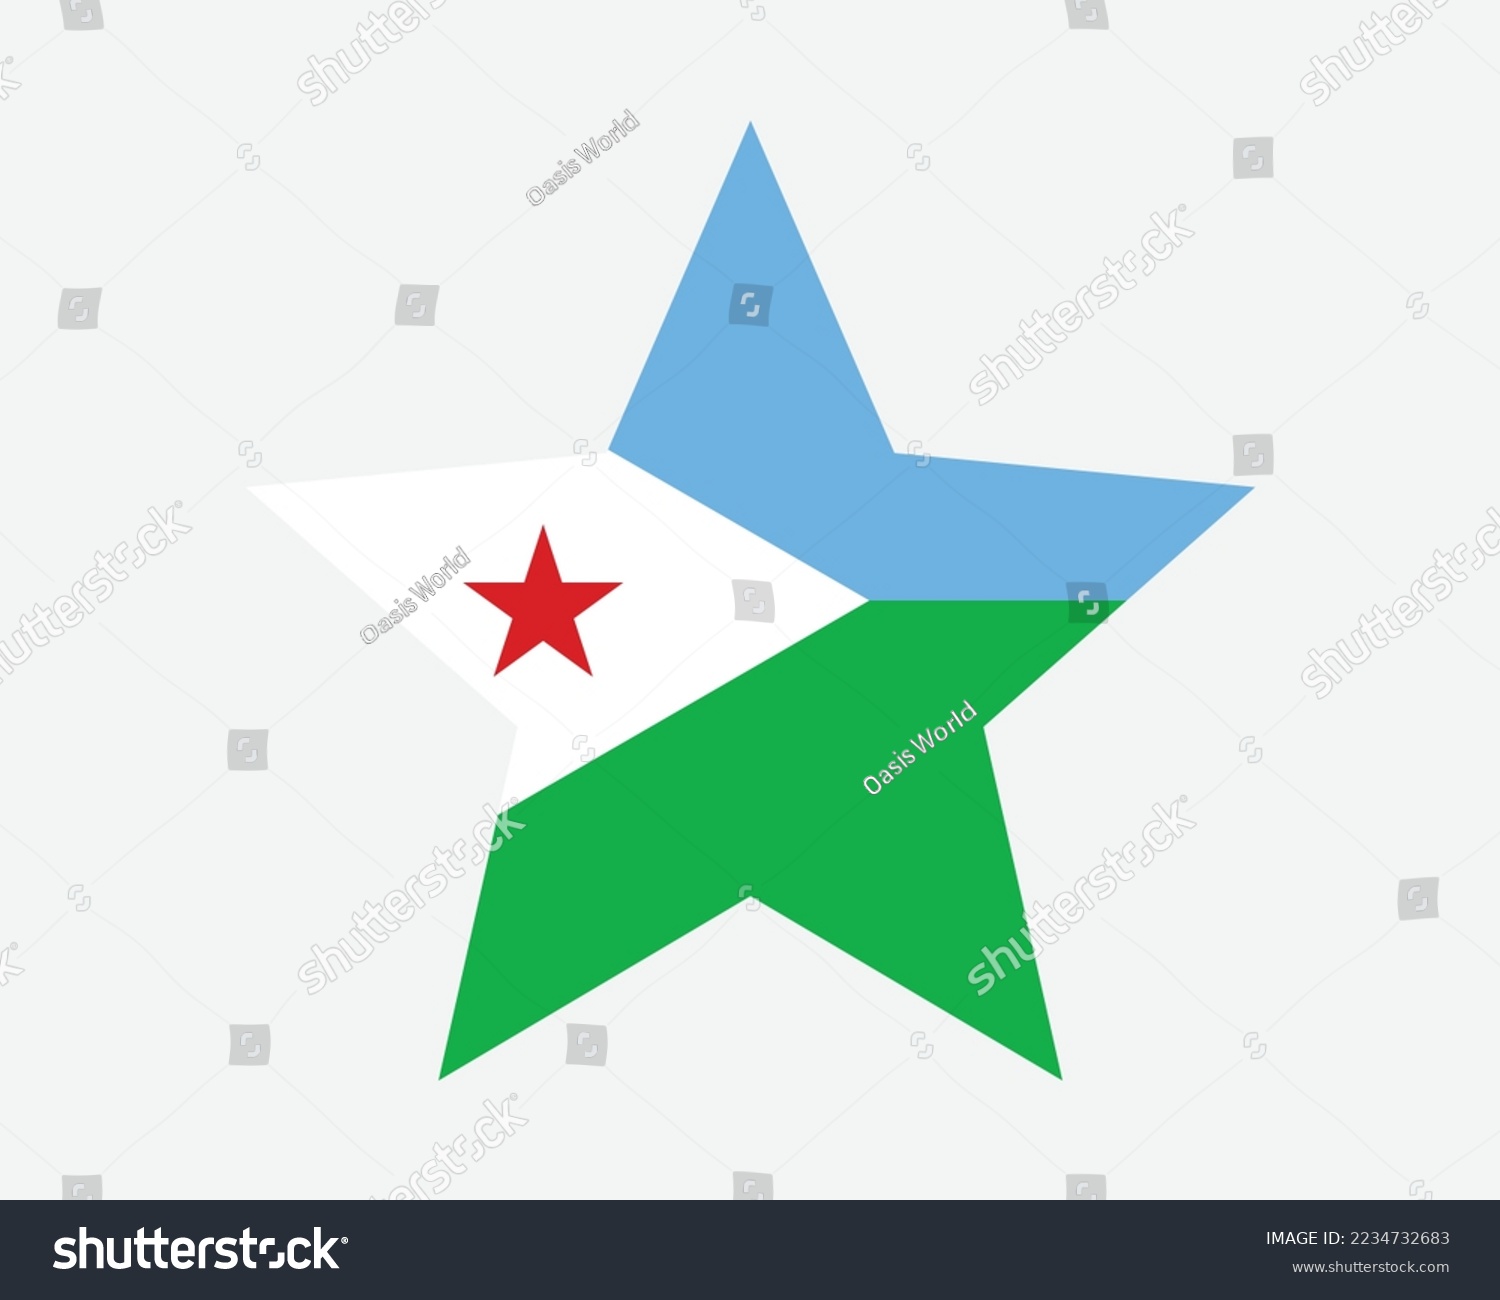 SVG of Djibouti Star Flag. Djiboutian Star Shape Flag. Country National Banner Icon Symbol Vector 2D Flat Artwork Graphic Illustration svg